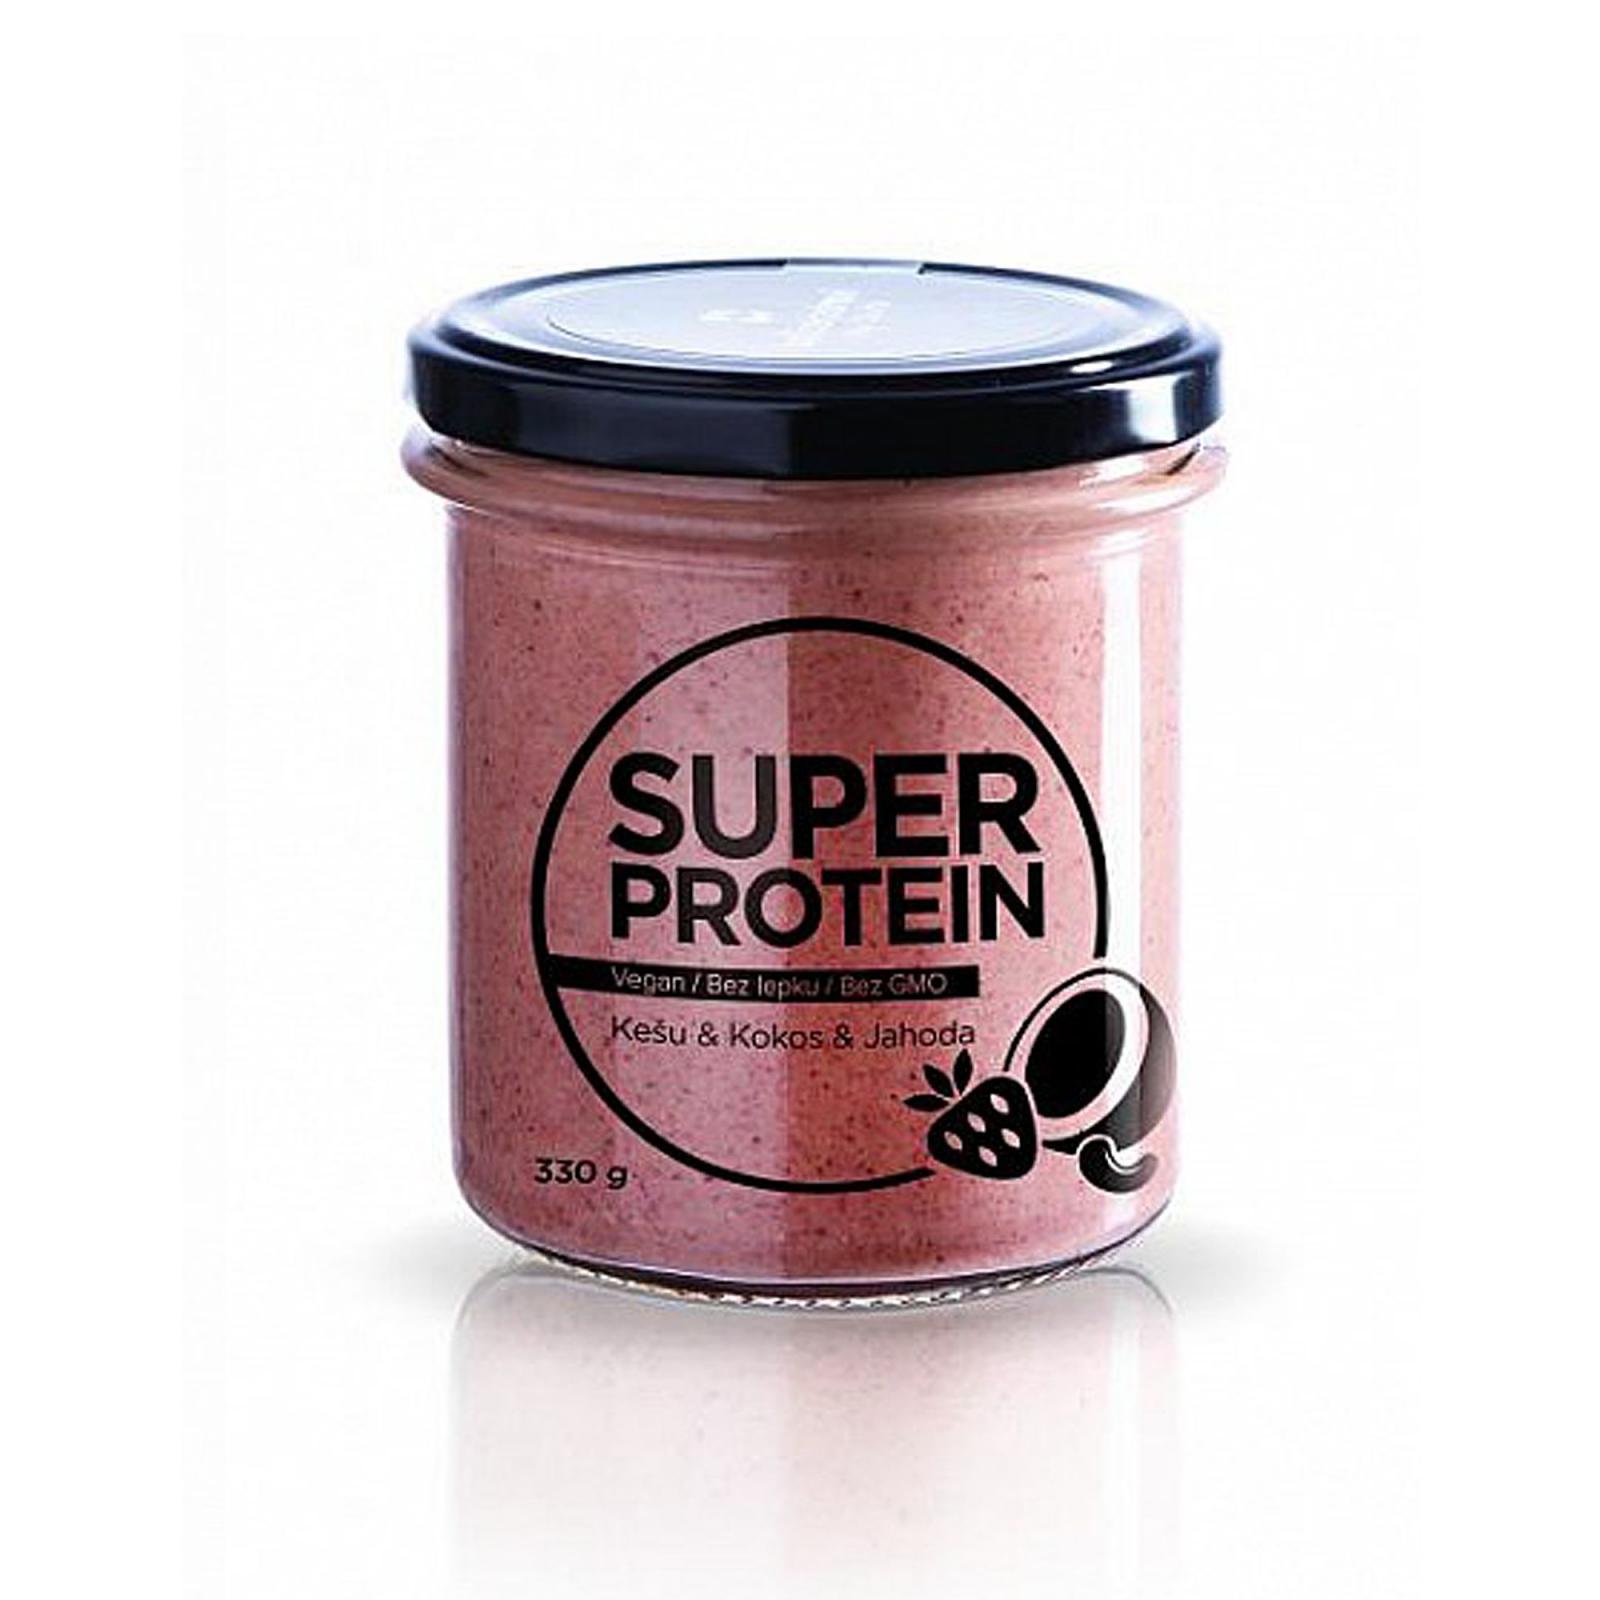 Balíček zdraví Máslo superprotein, kešu, kokos, jahoda 21% proteinu, Exspirace  330 g